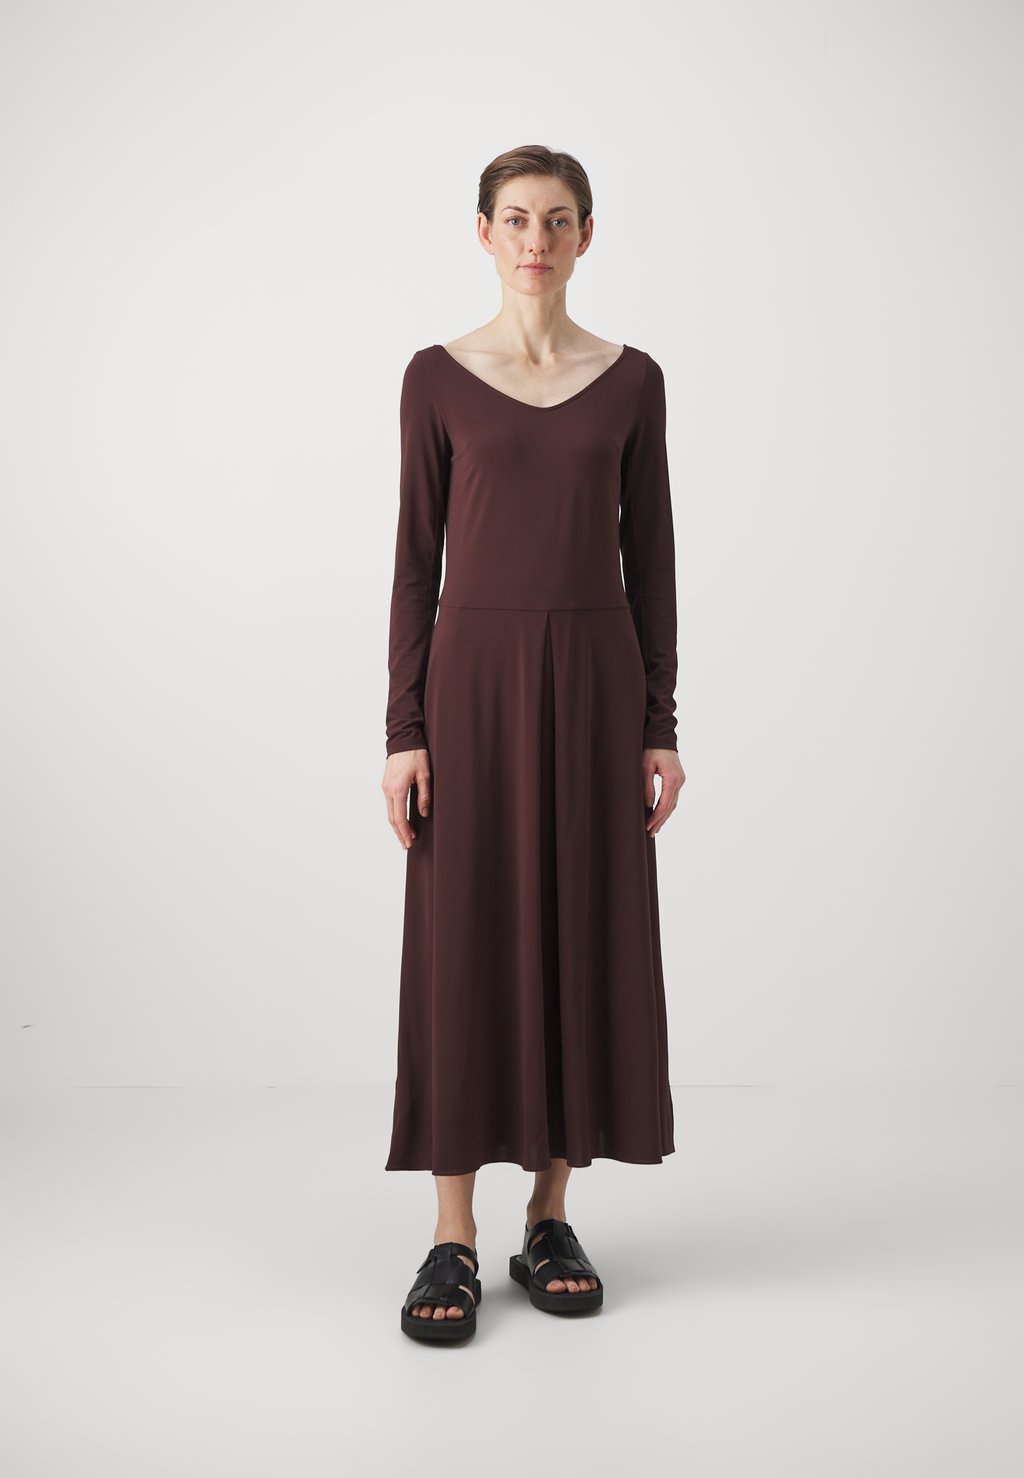 Длинное платье VALIDO Max Mara Leisure, темно коричневый коричневый тренч vtrench max mara